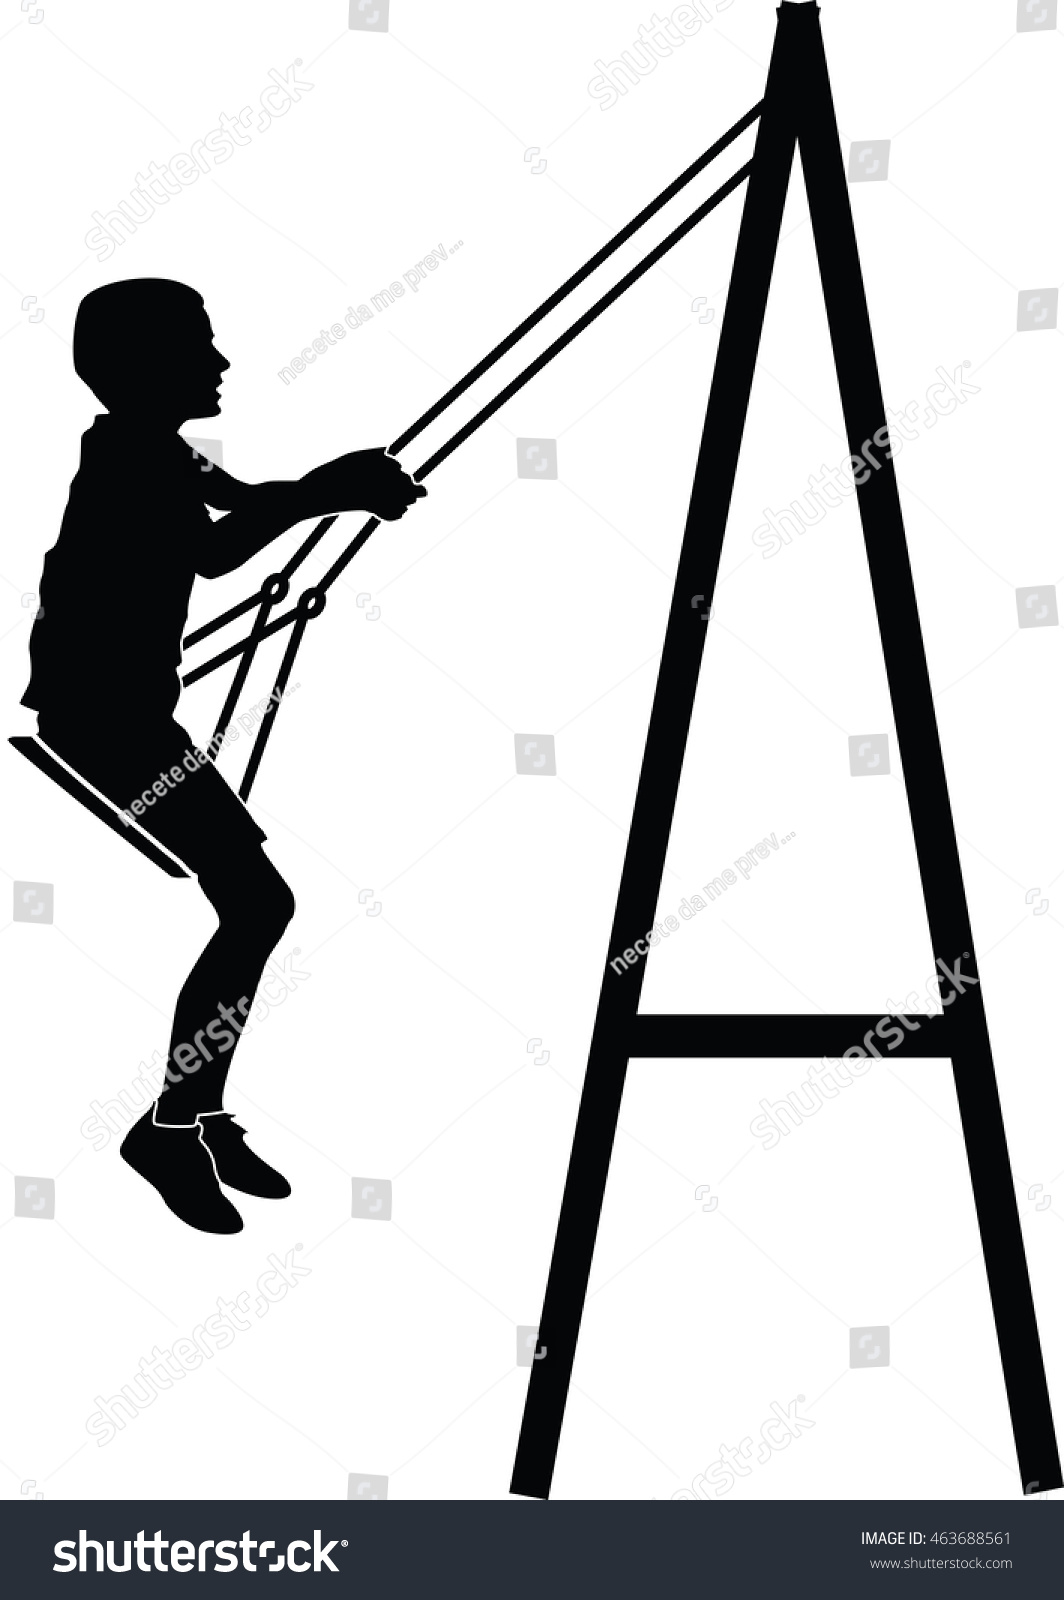 Boy Swinging On Swing Vector Silhouette Stock Vector 463688561